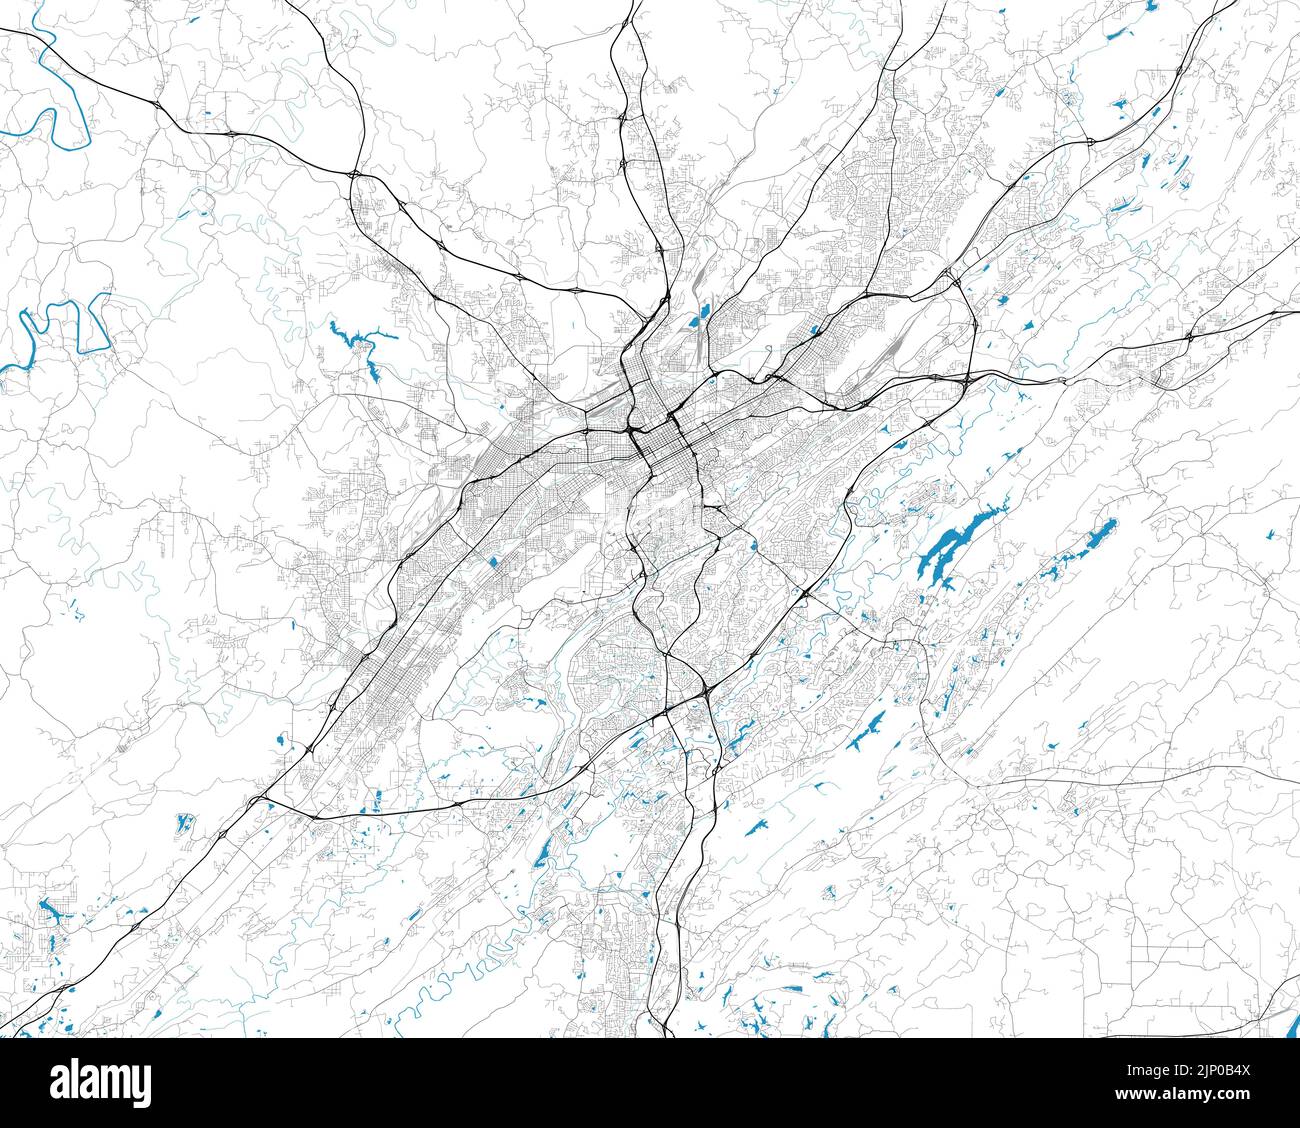 Vector Editable City Map Birmingham Alabama United States 2JP0B4X 